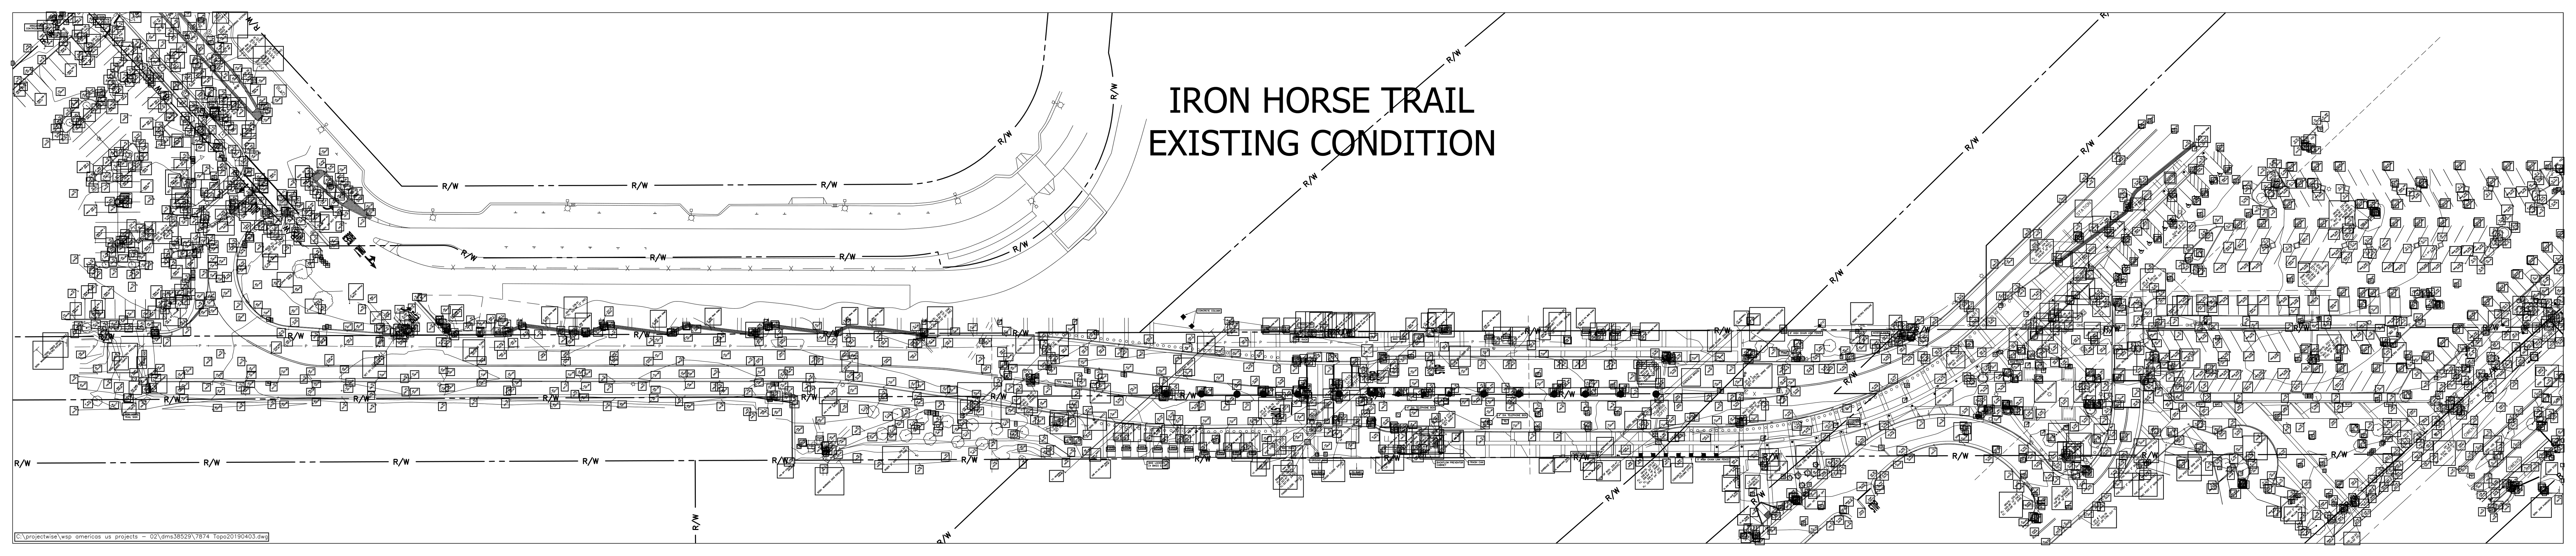 Existing Iron Horse Trail blueprint